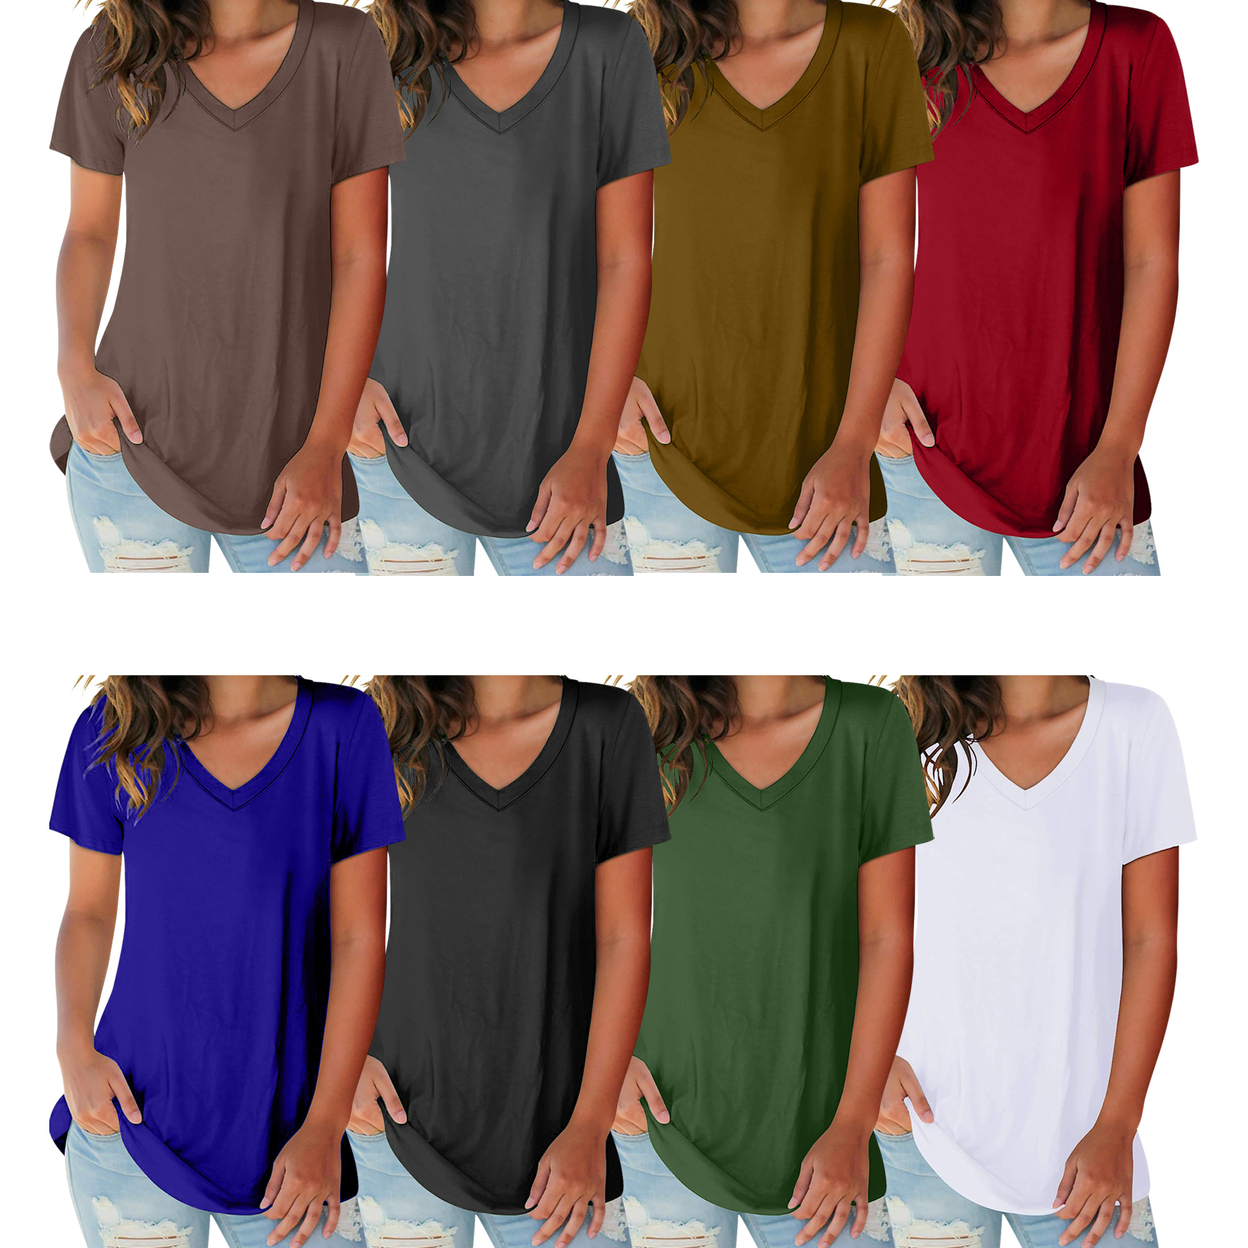 2-Pack: Women's Ultra Soft Smooth Cotton Blend Basic V-Neck Short Sleeve Shirts - Grey & Mustard, Large